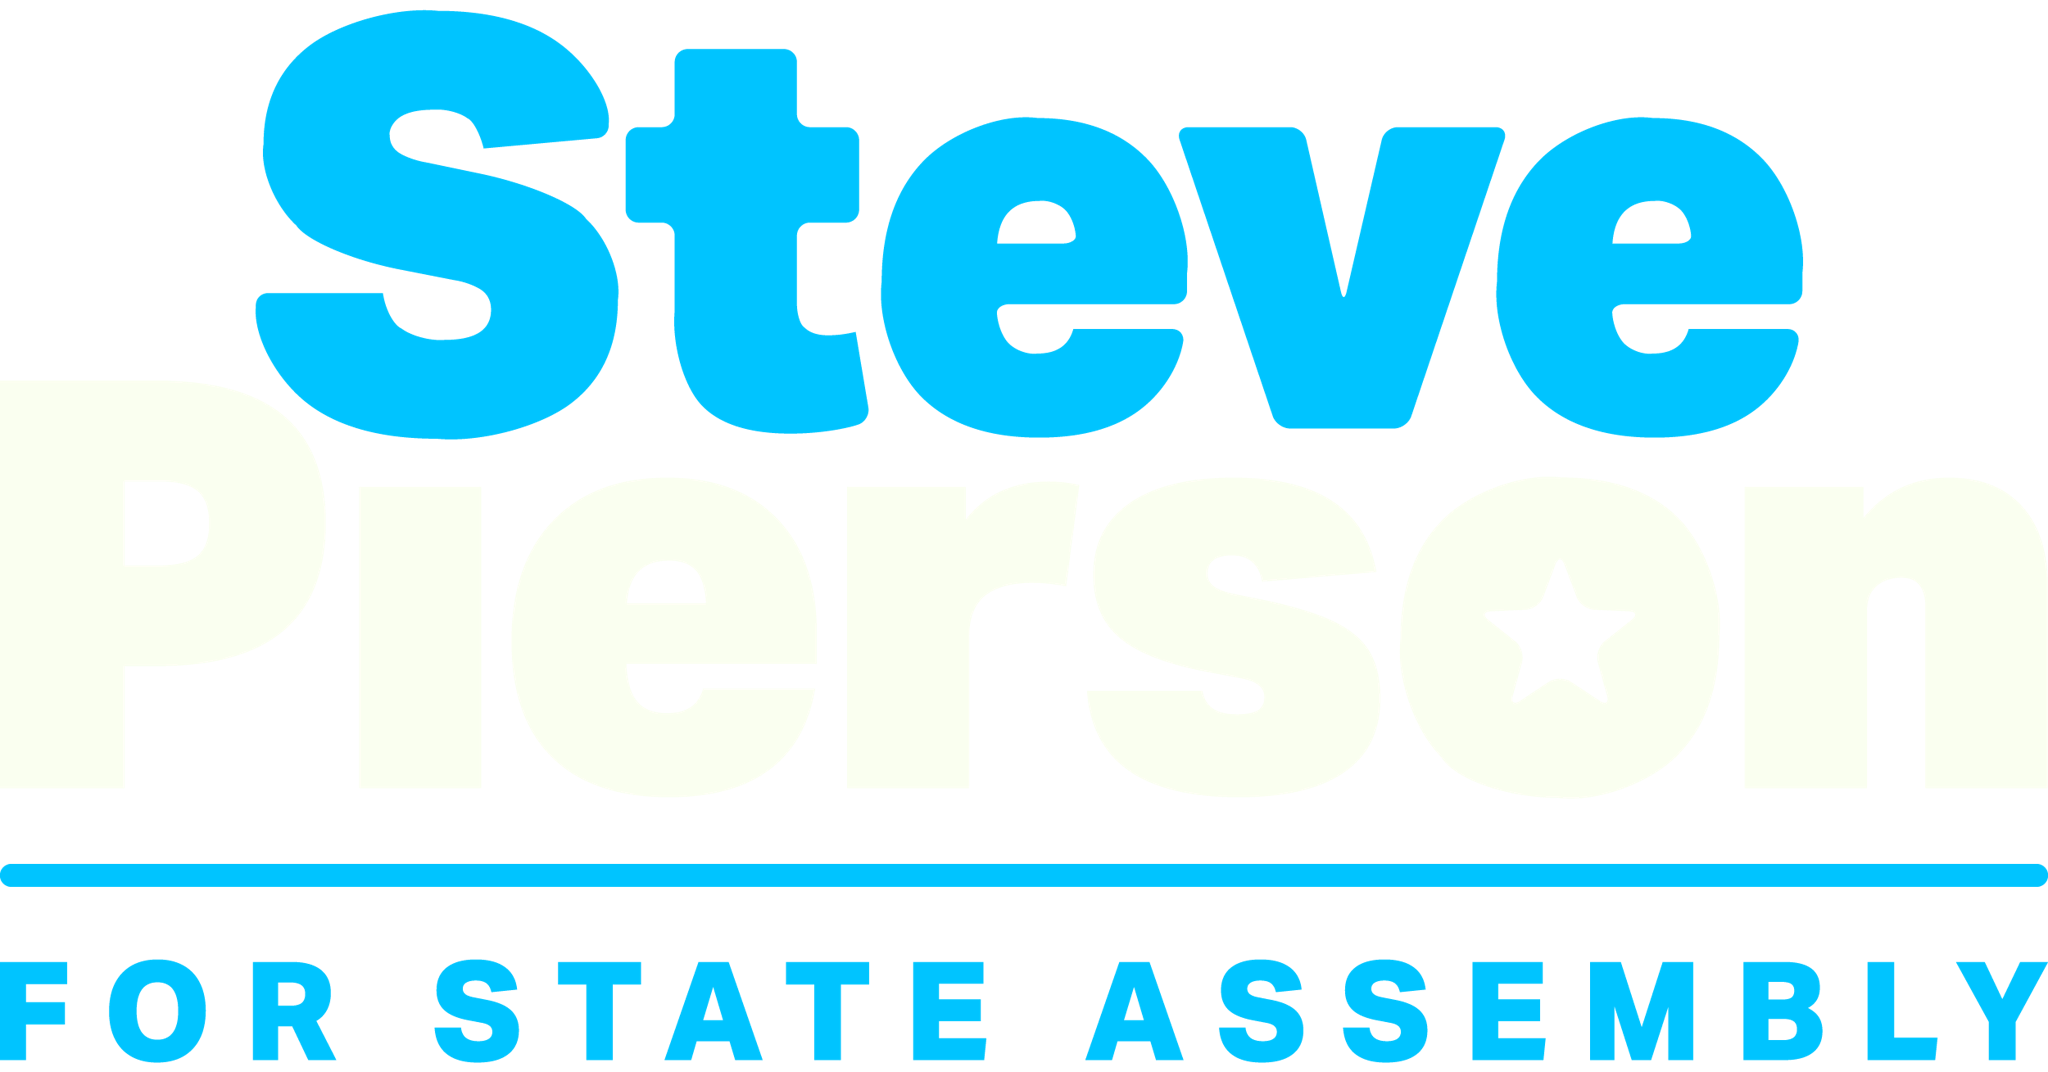 Steve Pierson For Assembly logo